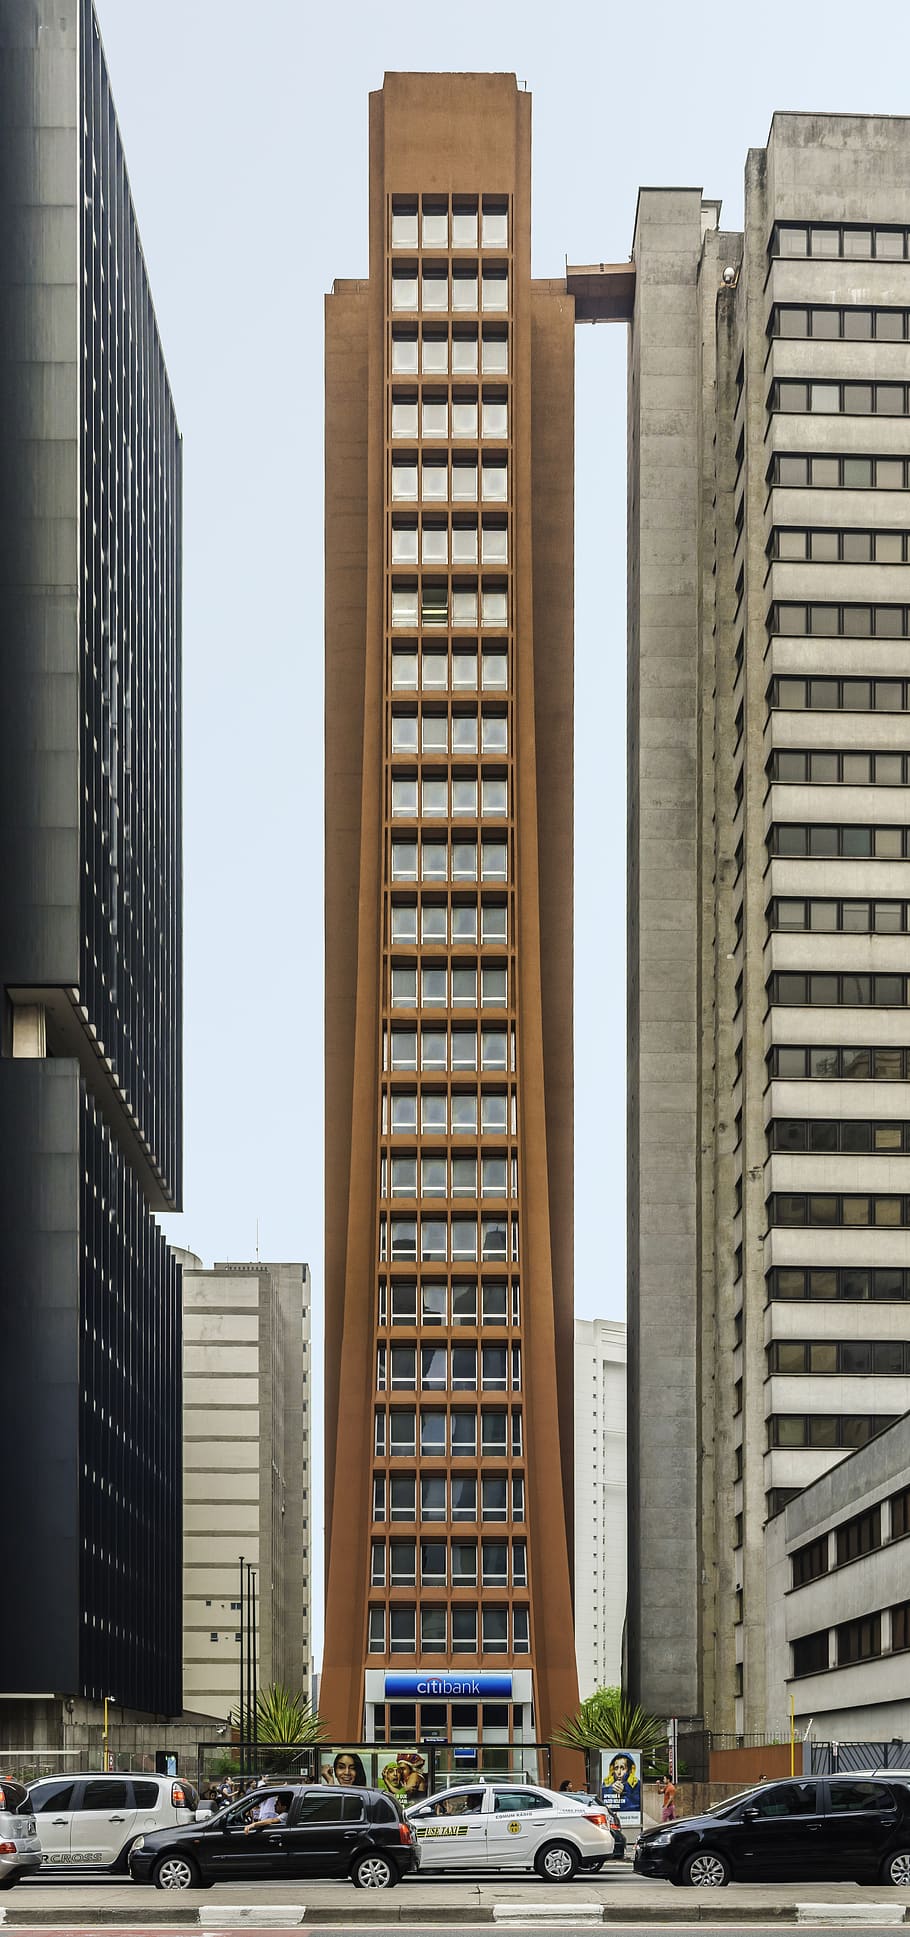 paulista avenue, sao paulo brazil, street, skyscrapers, city, HD wallpaper